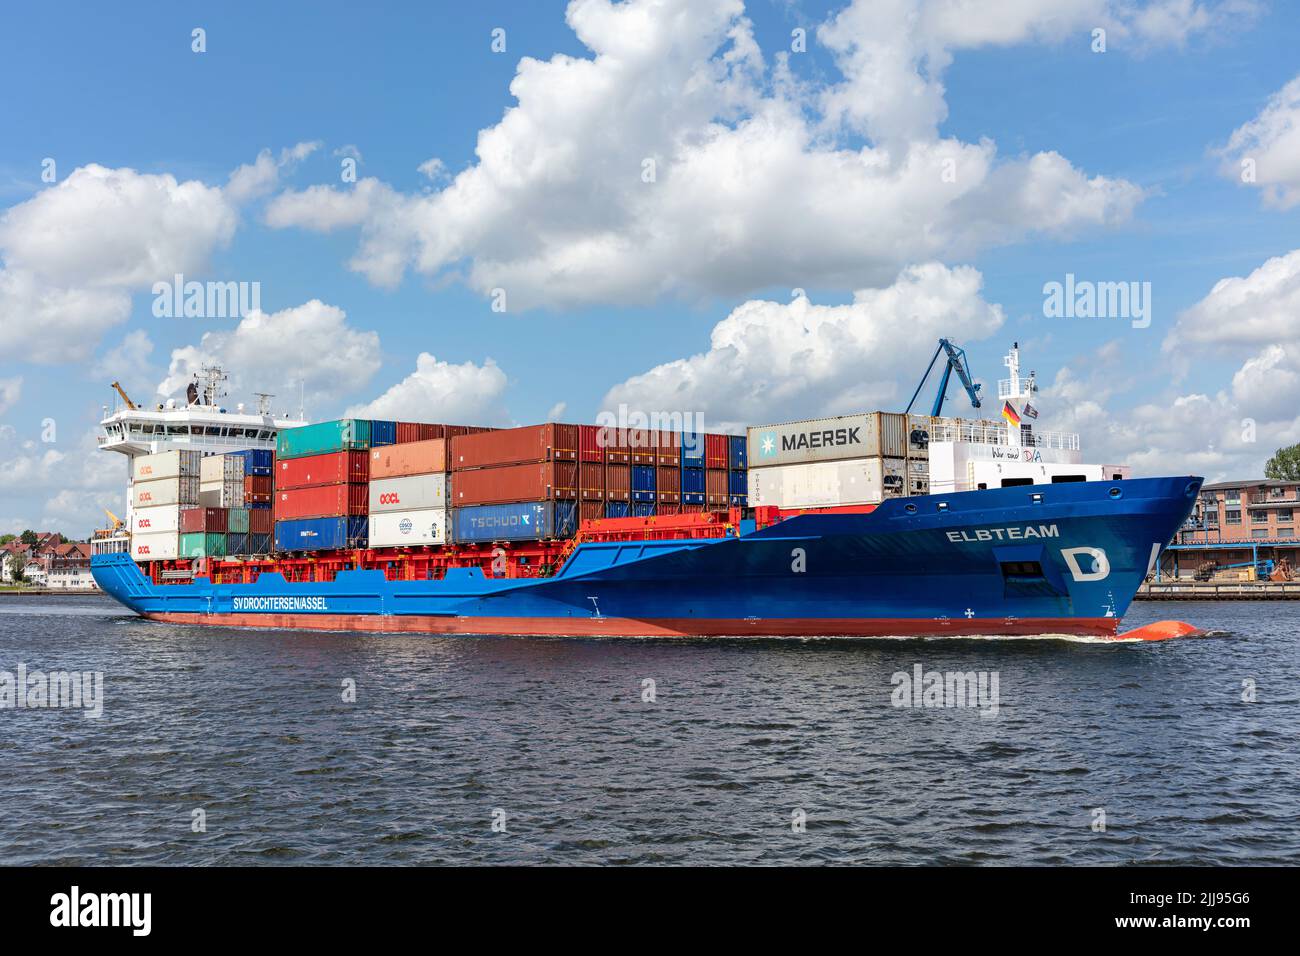 Containerschiff ELBTEAM im Nord-Ostsee-Kanal Stockfoto